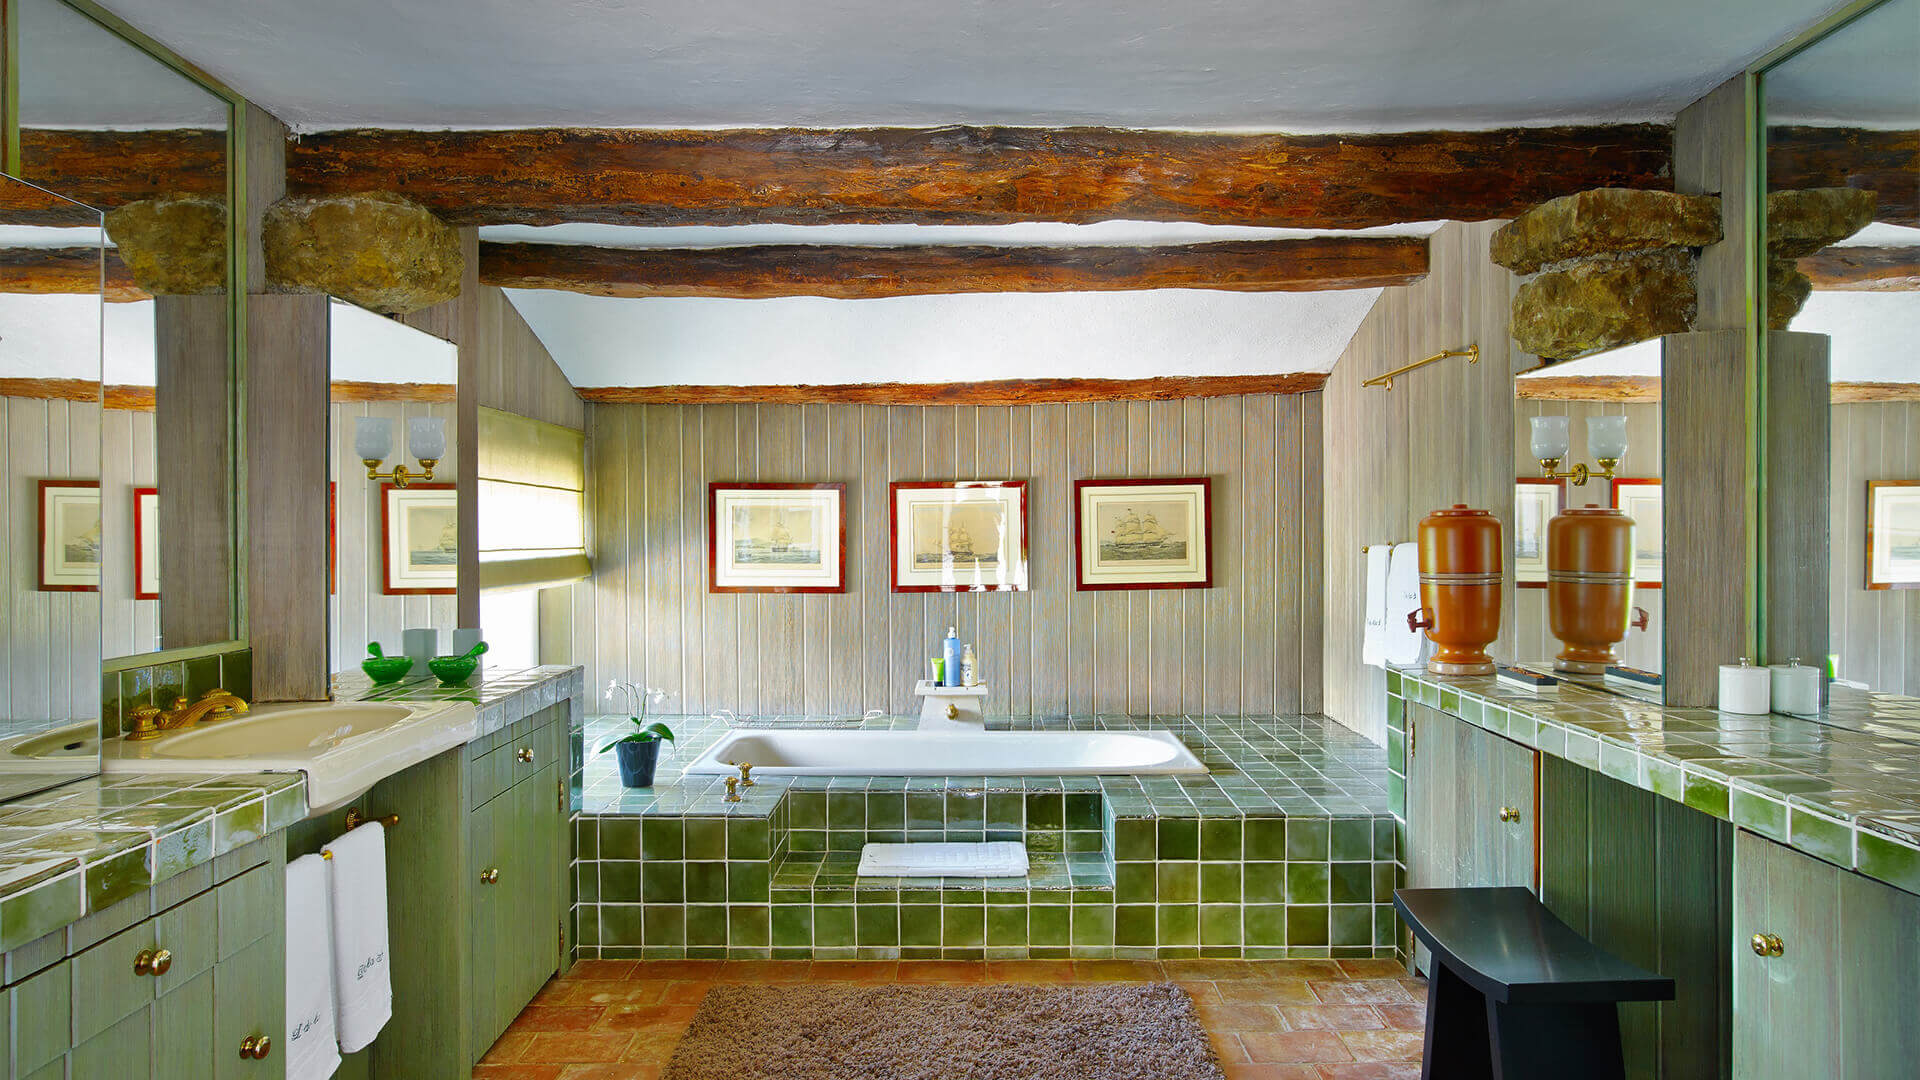 Large Domain Valbonne rustic green bathroom with luxury bathtub